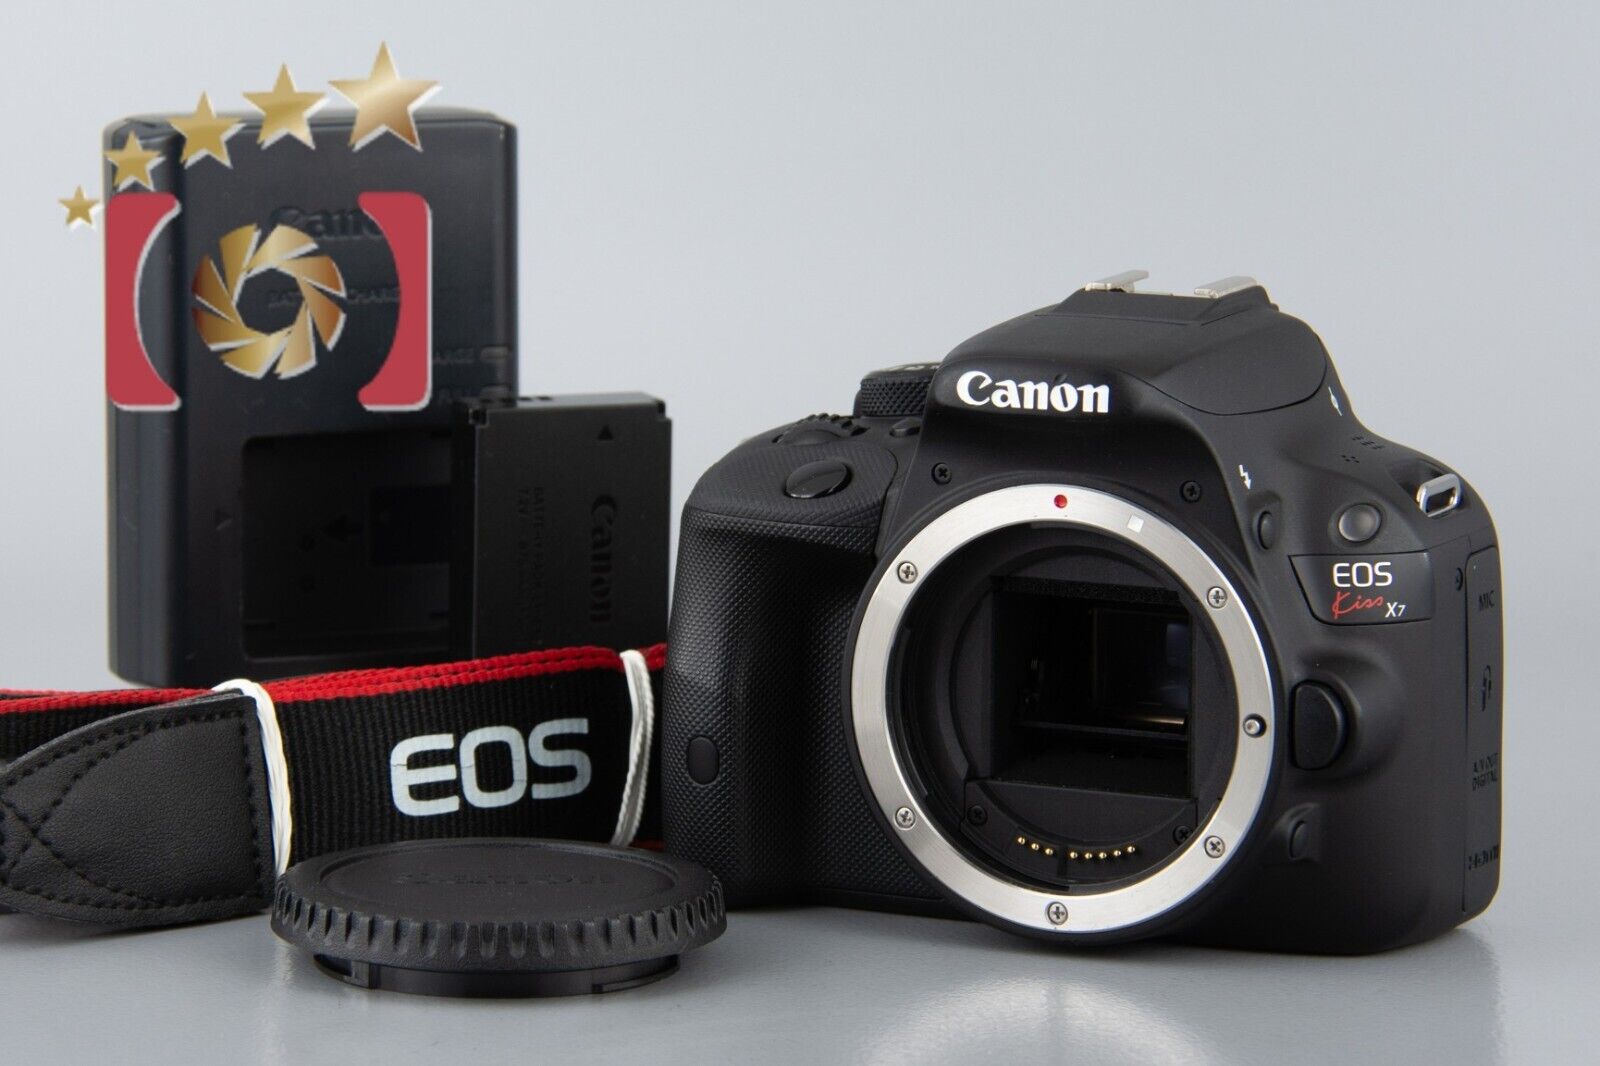 "Shutter count 2,132" Canon EOS Kiss X7 / Rebel SL1 / 100D 18.0 MP DSLR Camera